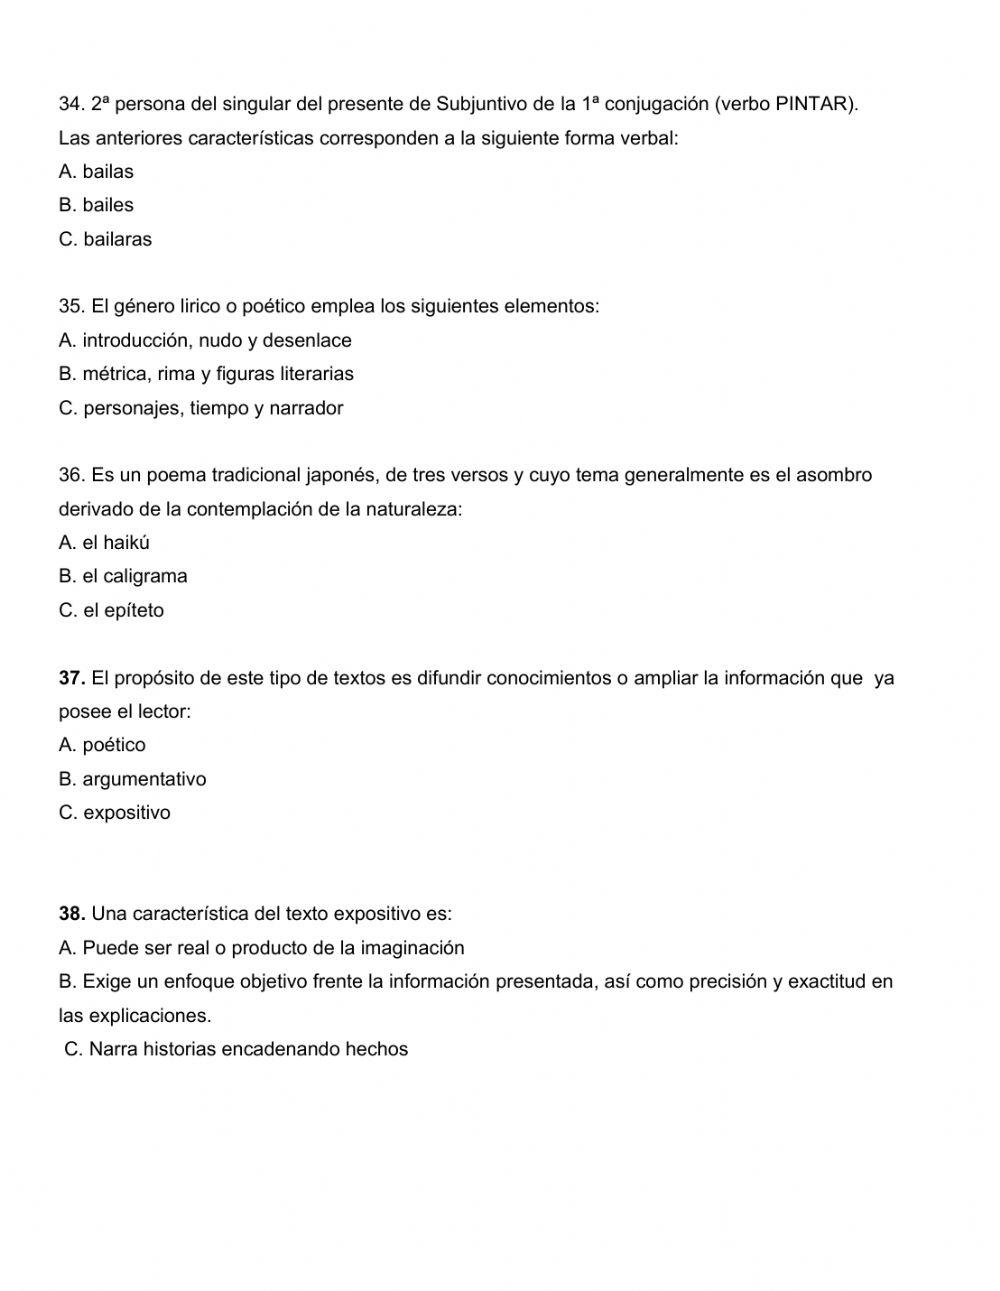 Acumulativo lengua castellana 7-02 3 periodo 2020